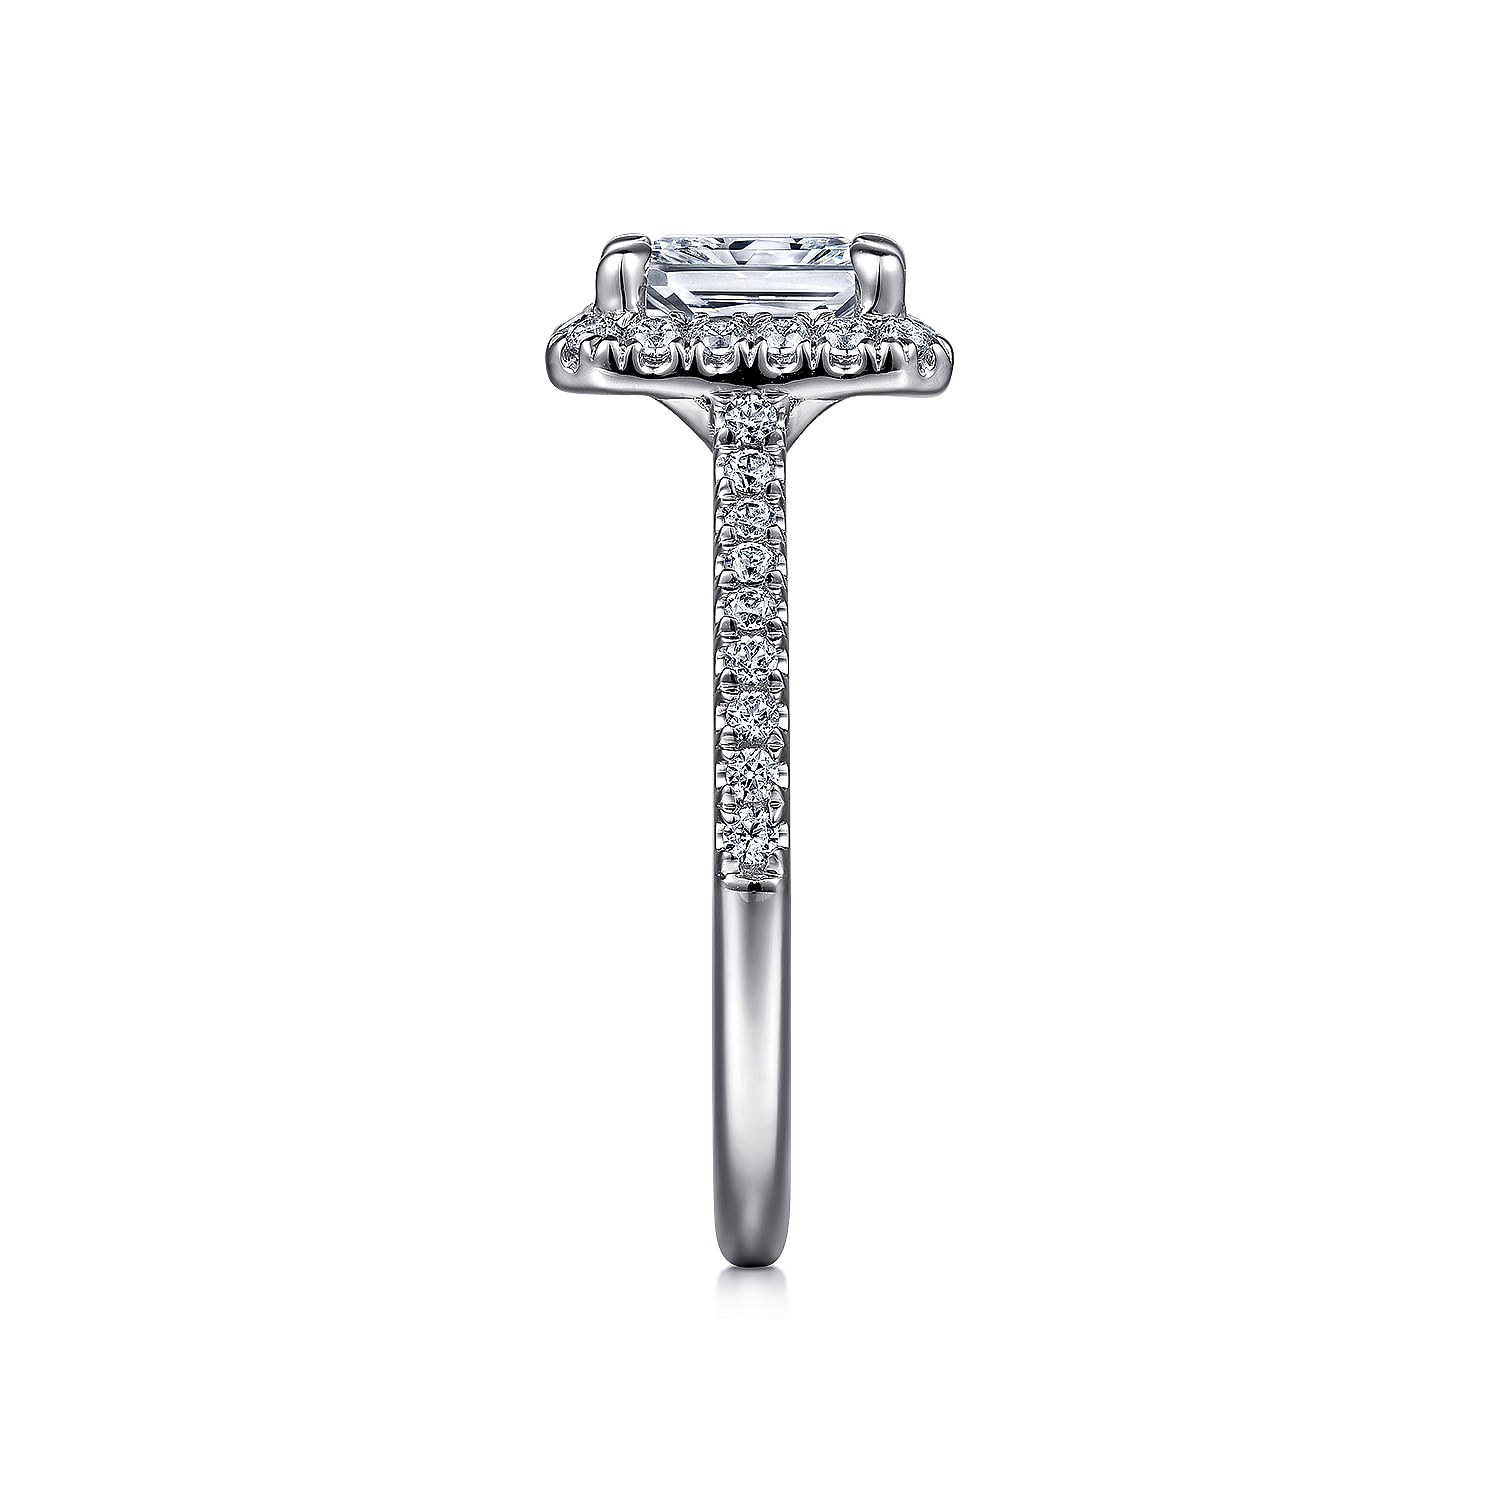 14K White Gold Halo Rectangular Radiant Cut Diamond Engagement Ring